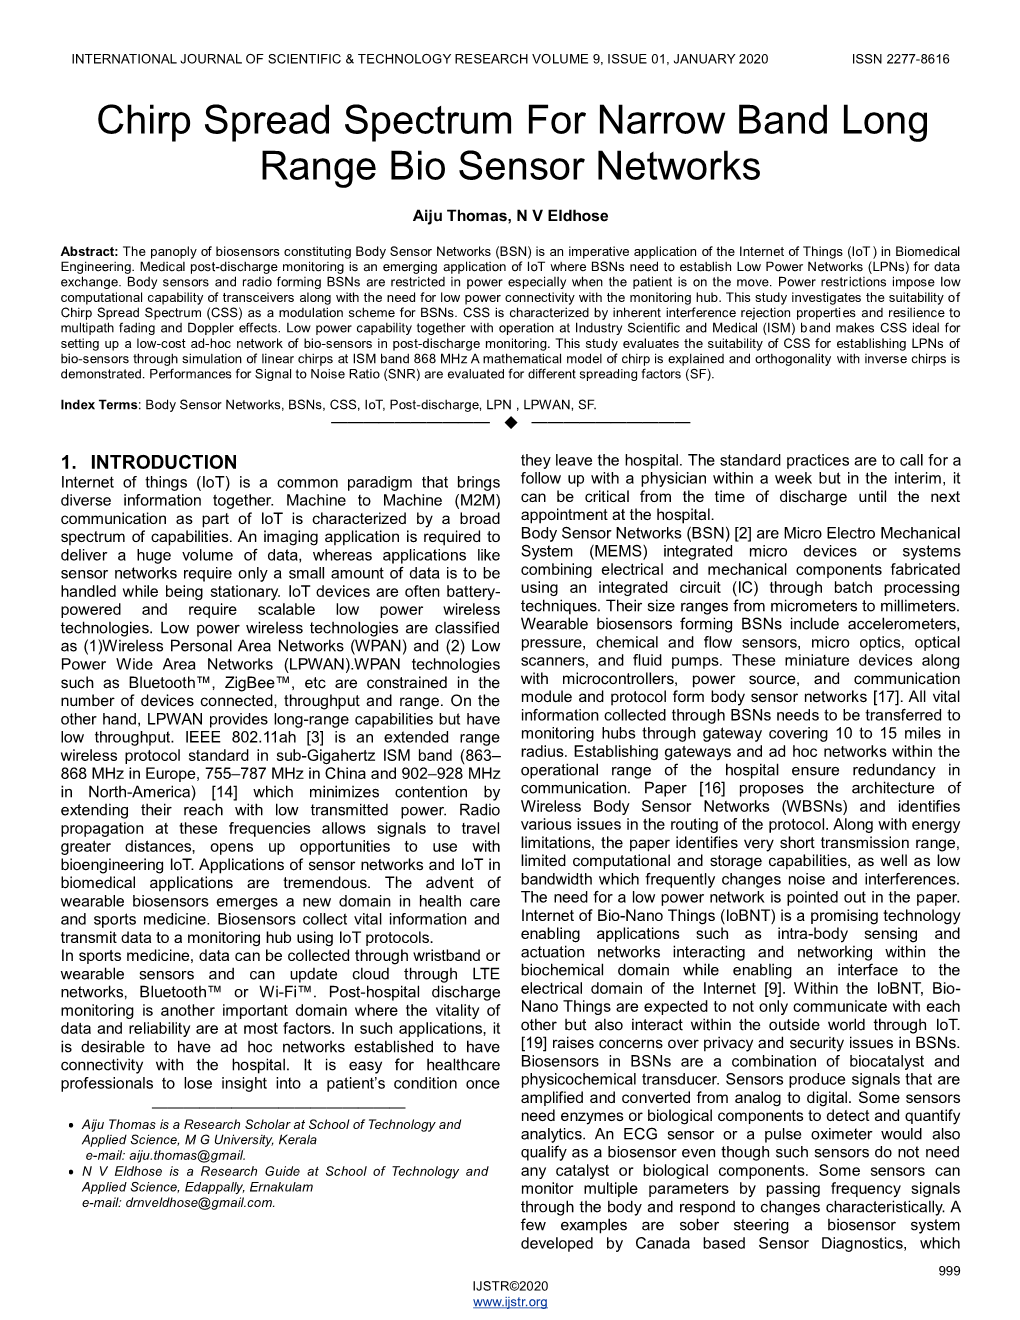 Chirp Spread Spectrum for Narrow Band Long Range Bio Sensor Networks